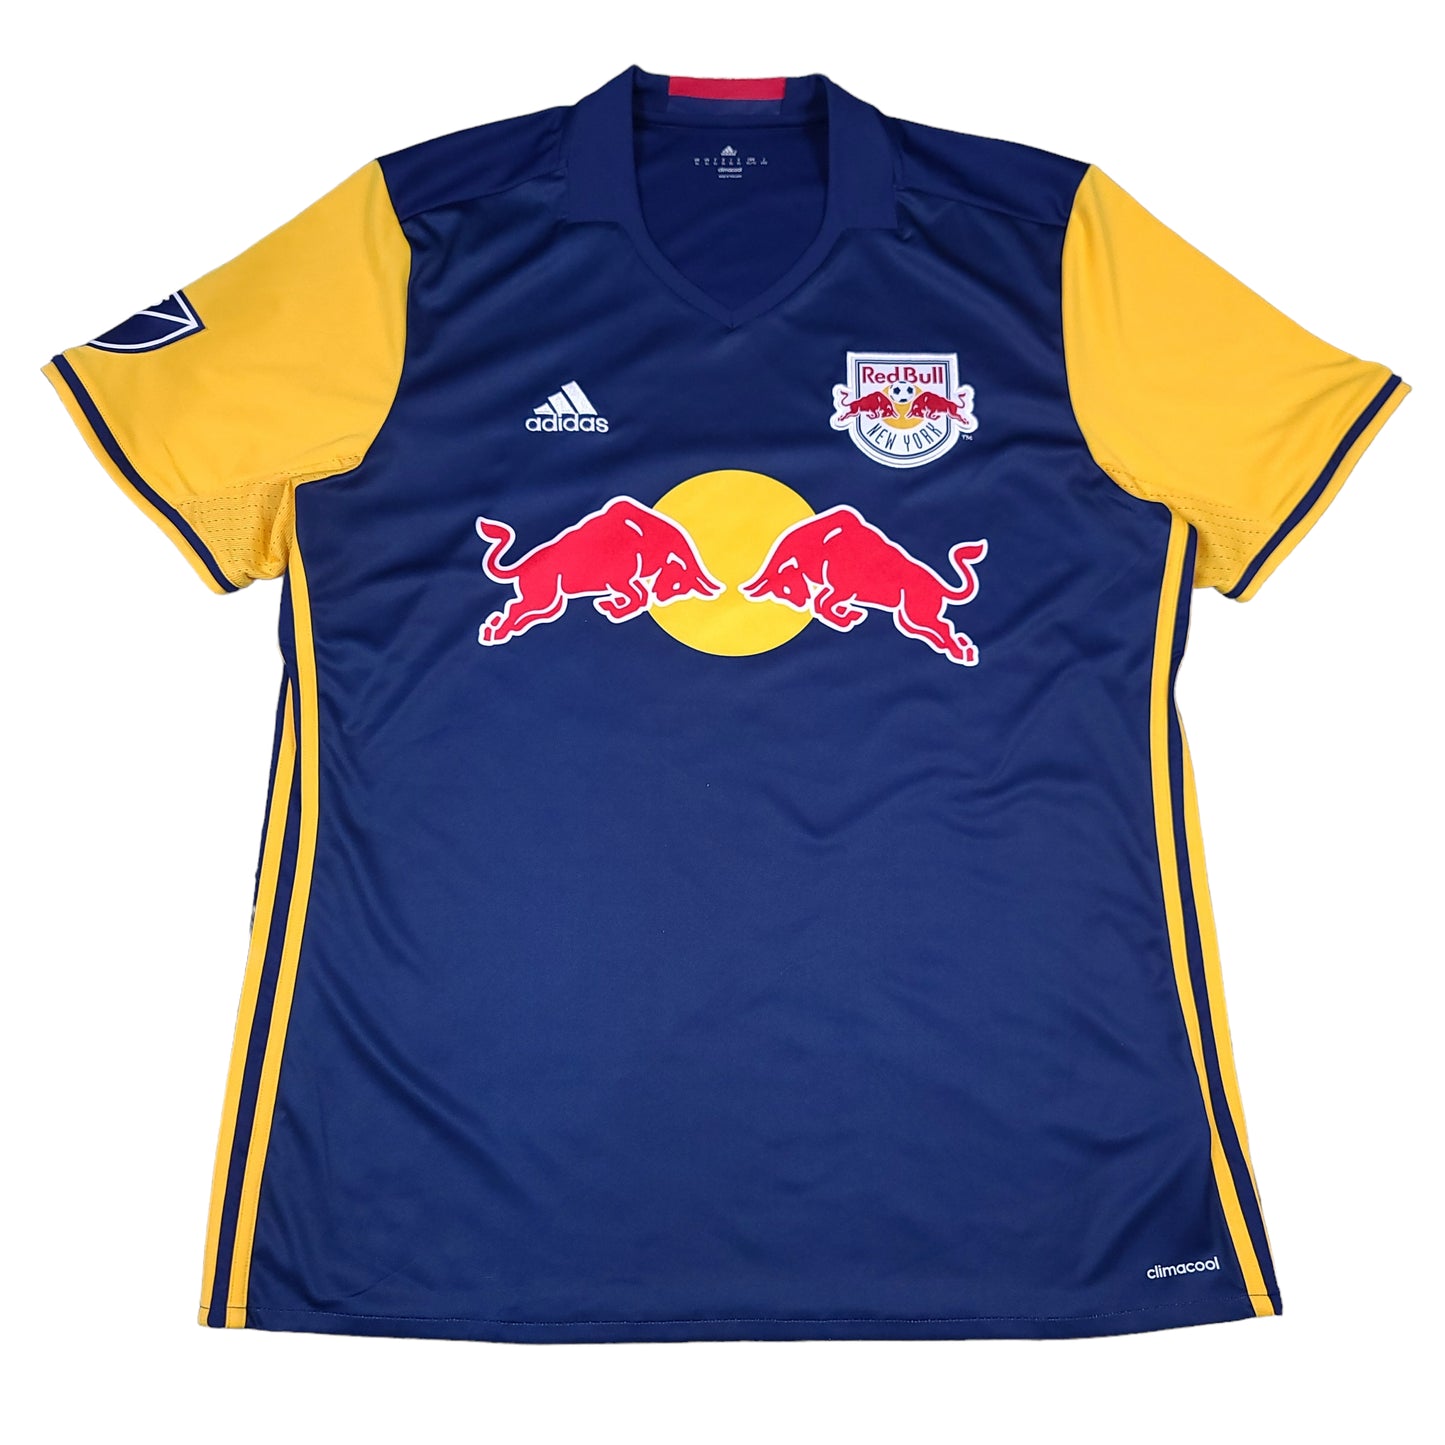 New York Red Bulls 2016-2017 adidas Away Soccer Jersey